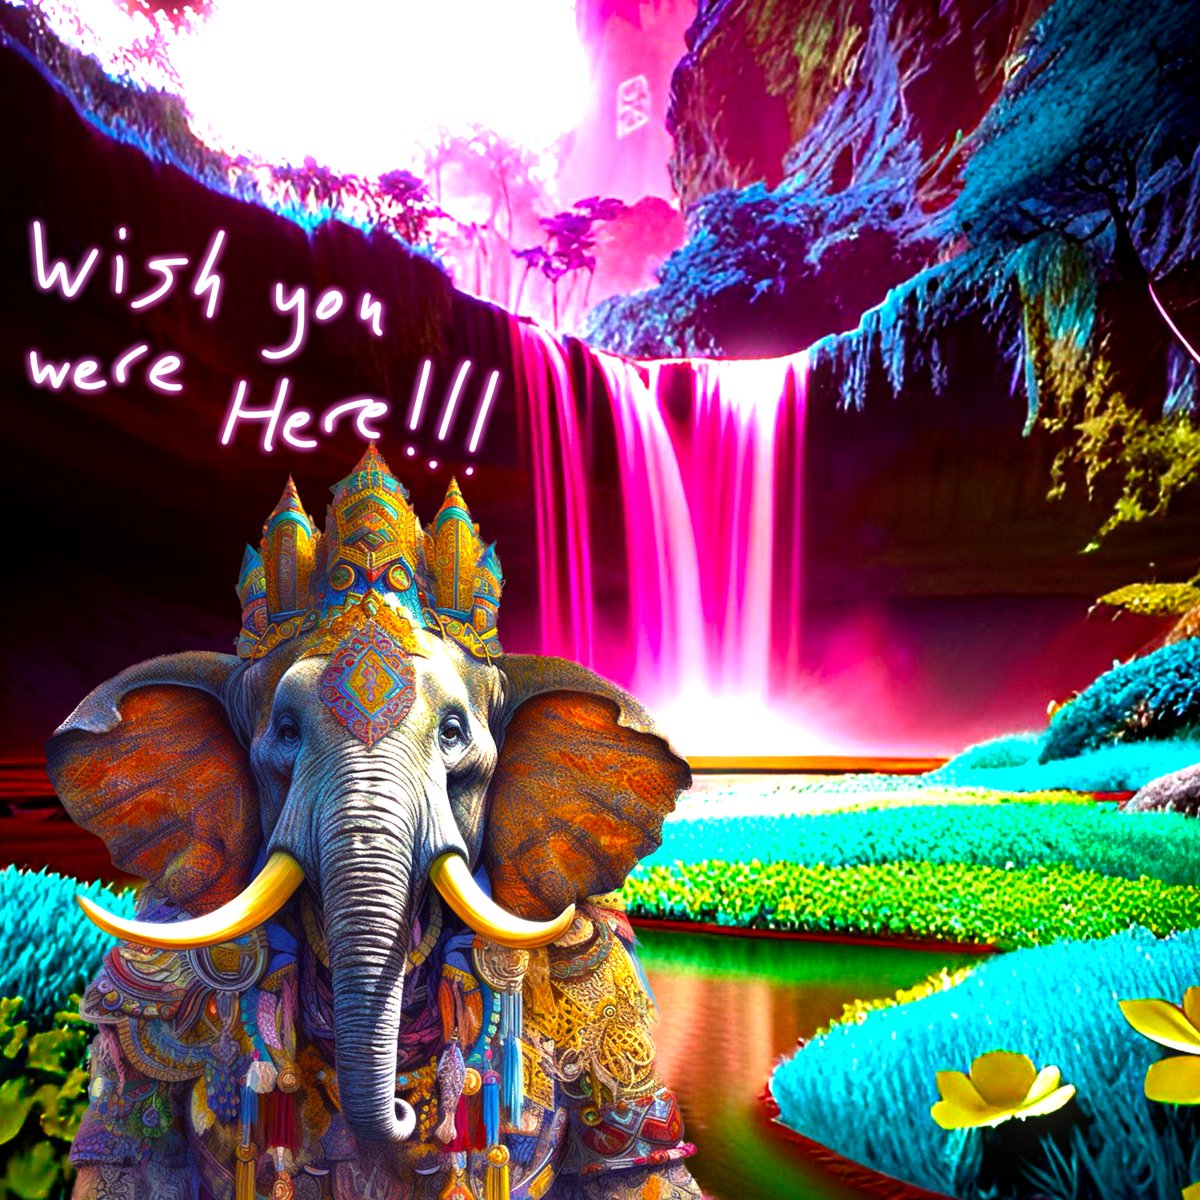 Check out my item listing on OpenSea! opensea.io/assets/ethereu… 

'The Elephant Shaman
1/1
.17 #eth 
#shamandrizzle #nftartwork #openseanft #opensea #digitalartist #digitalartwork #elephantart #shaman